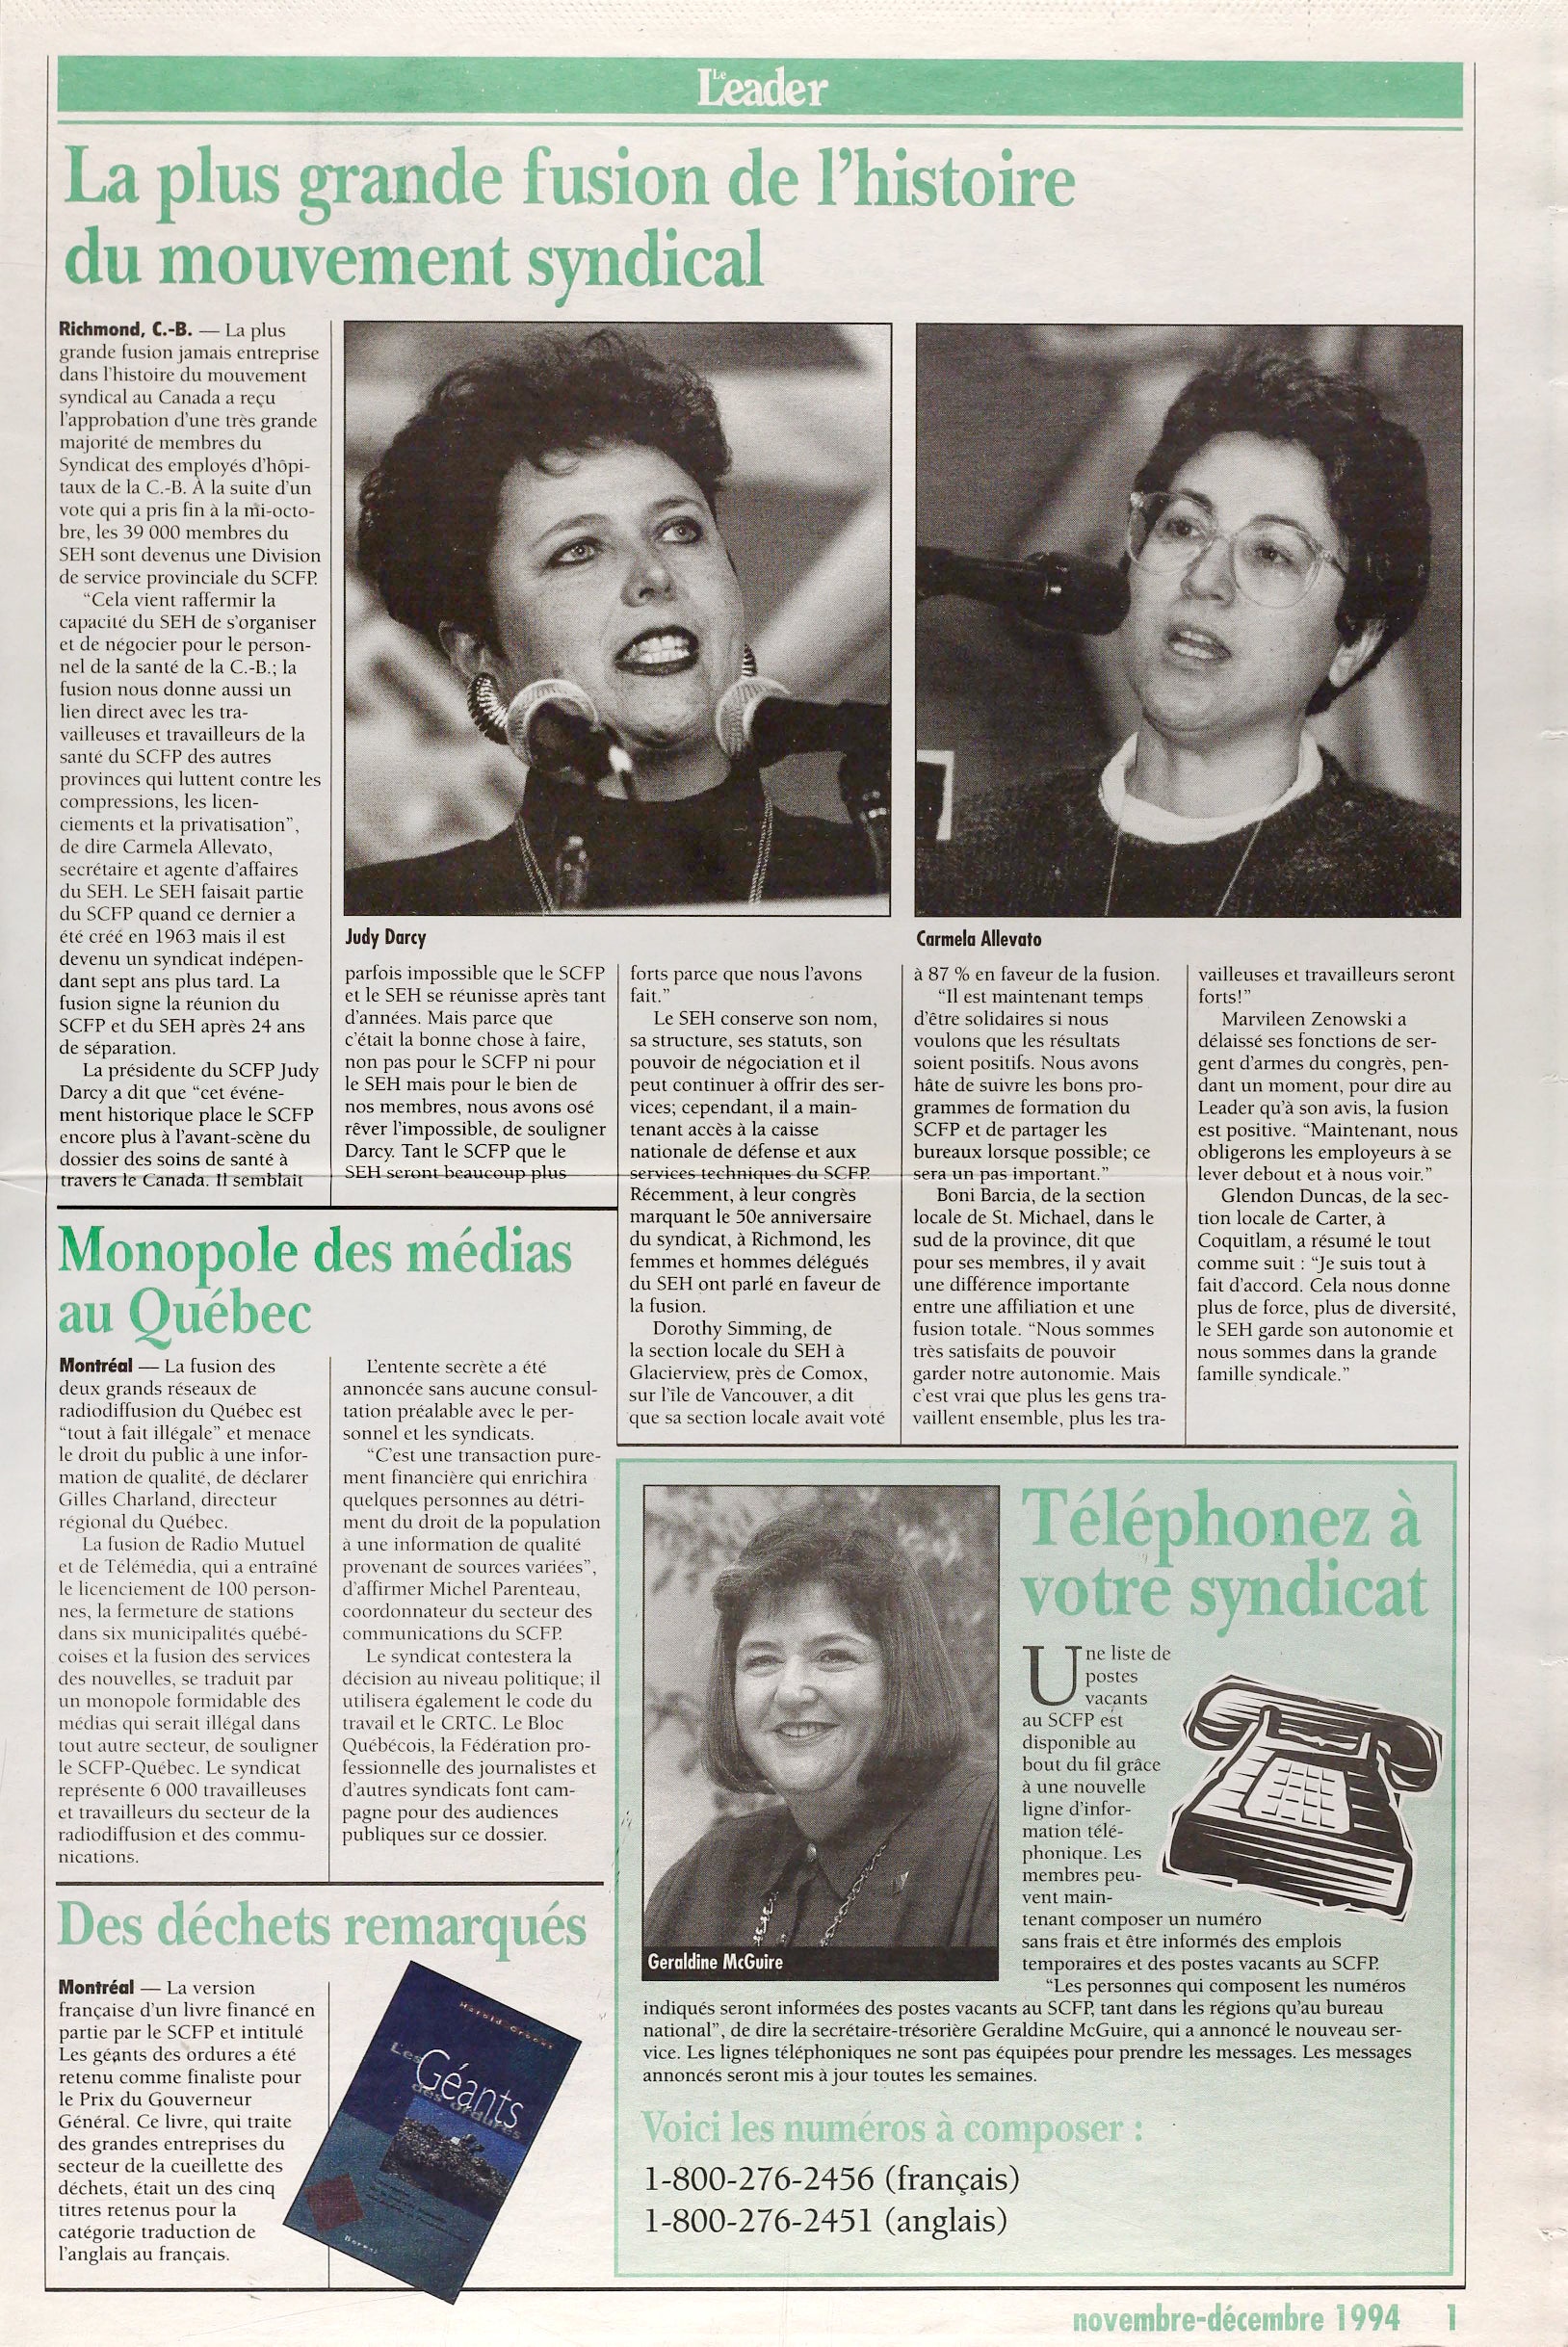 Le Leader, SCFP, nov-dec 1994, p.2 